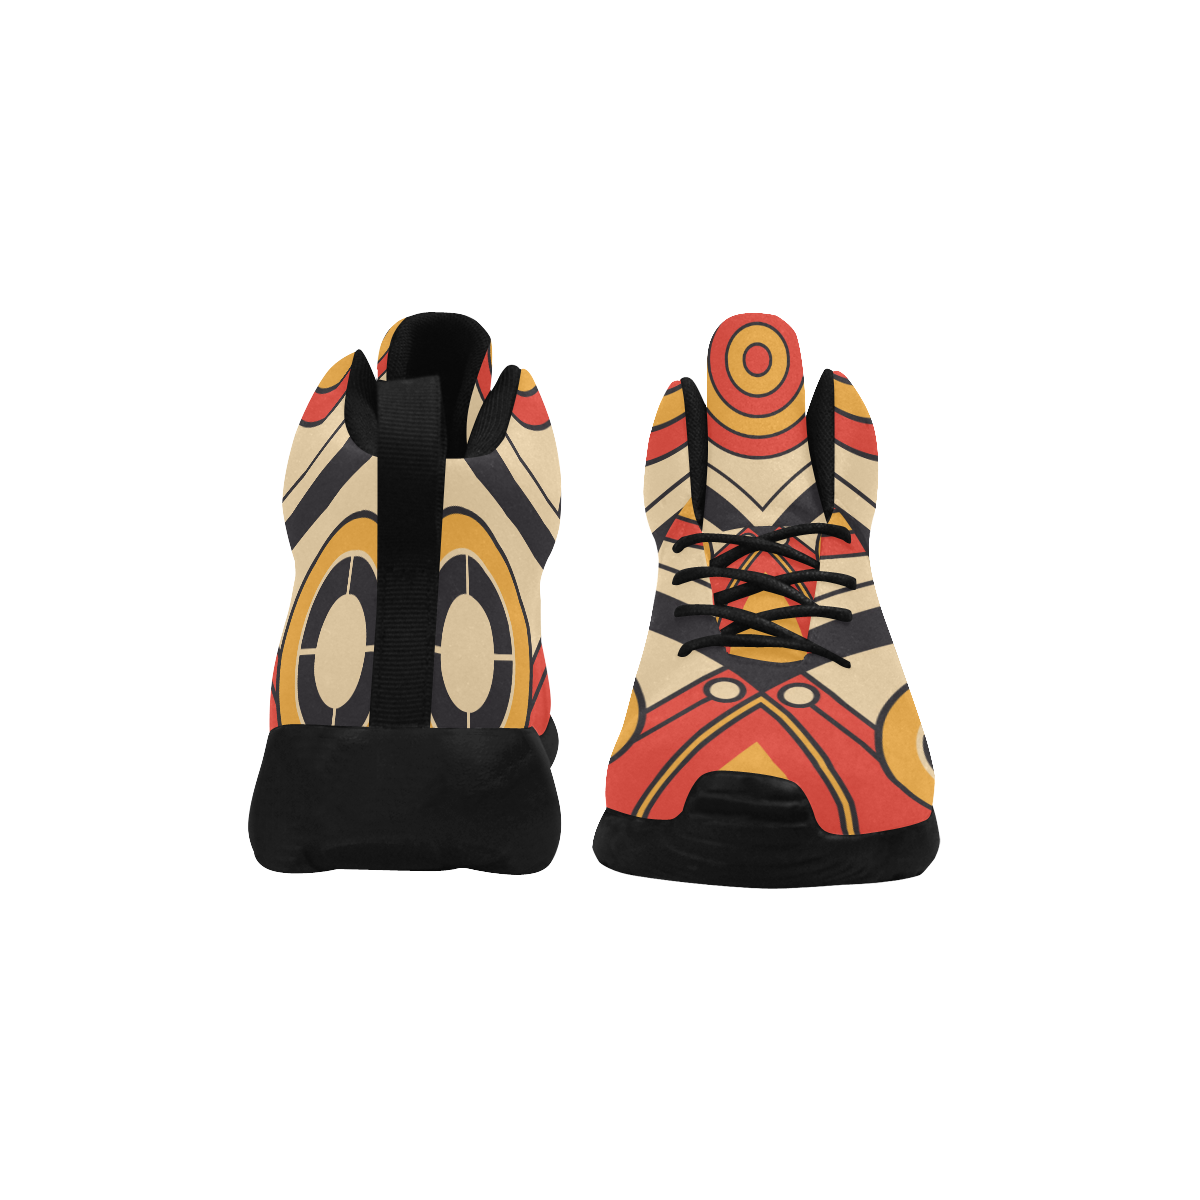 Geo Aztec Bull Tribal Men's Chukka Training Shoes (Model 57502)